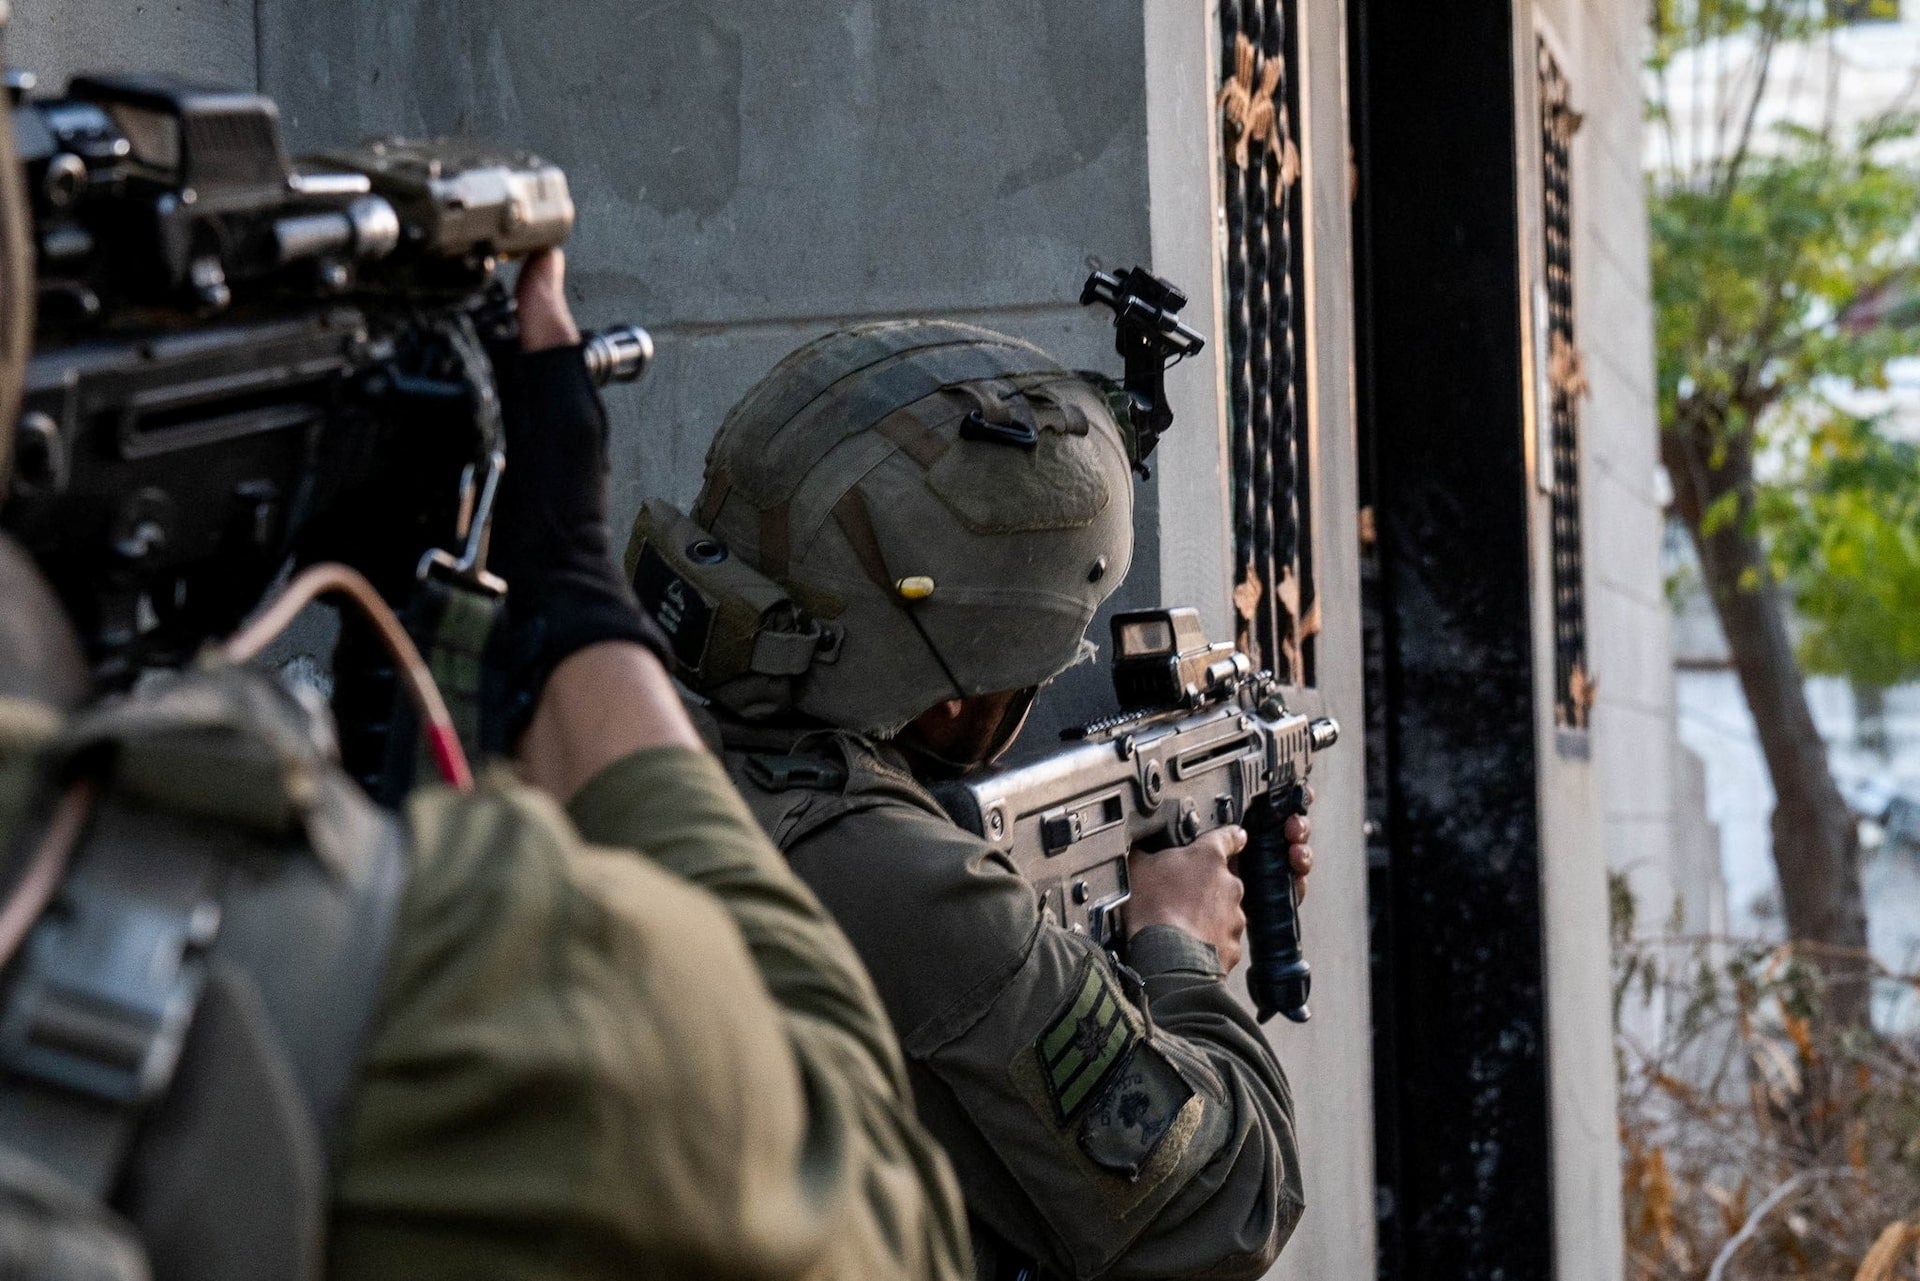 Israel still imposing “unlawful” restrictions on Gaza aid, UN rights office says